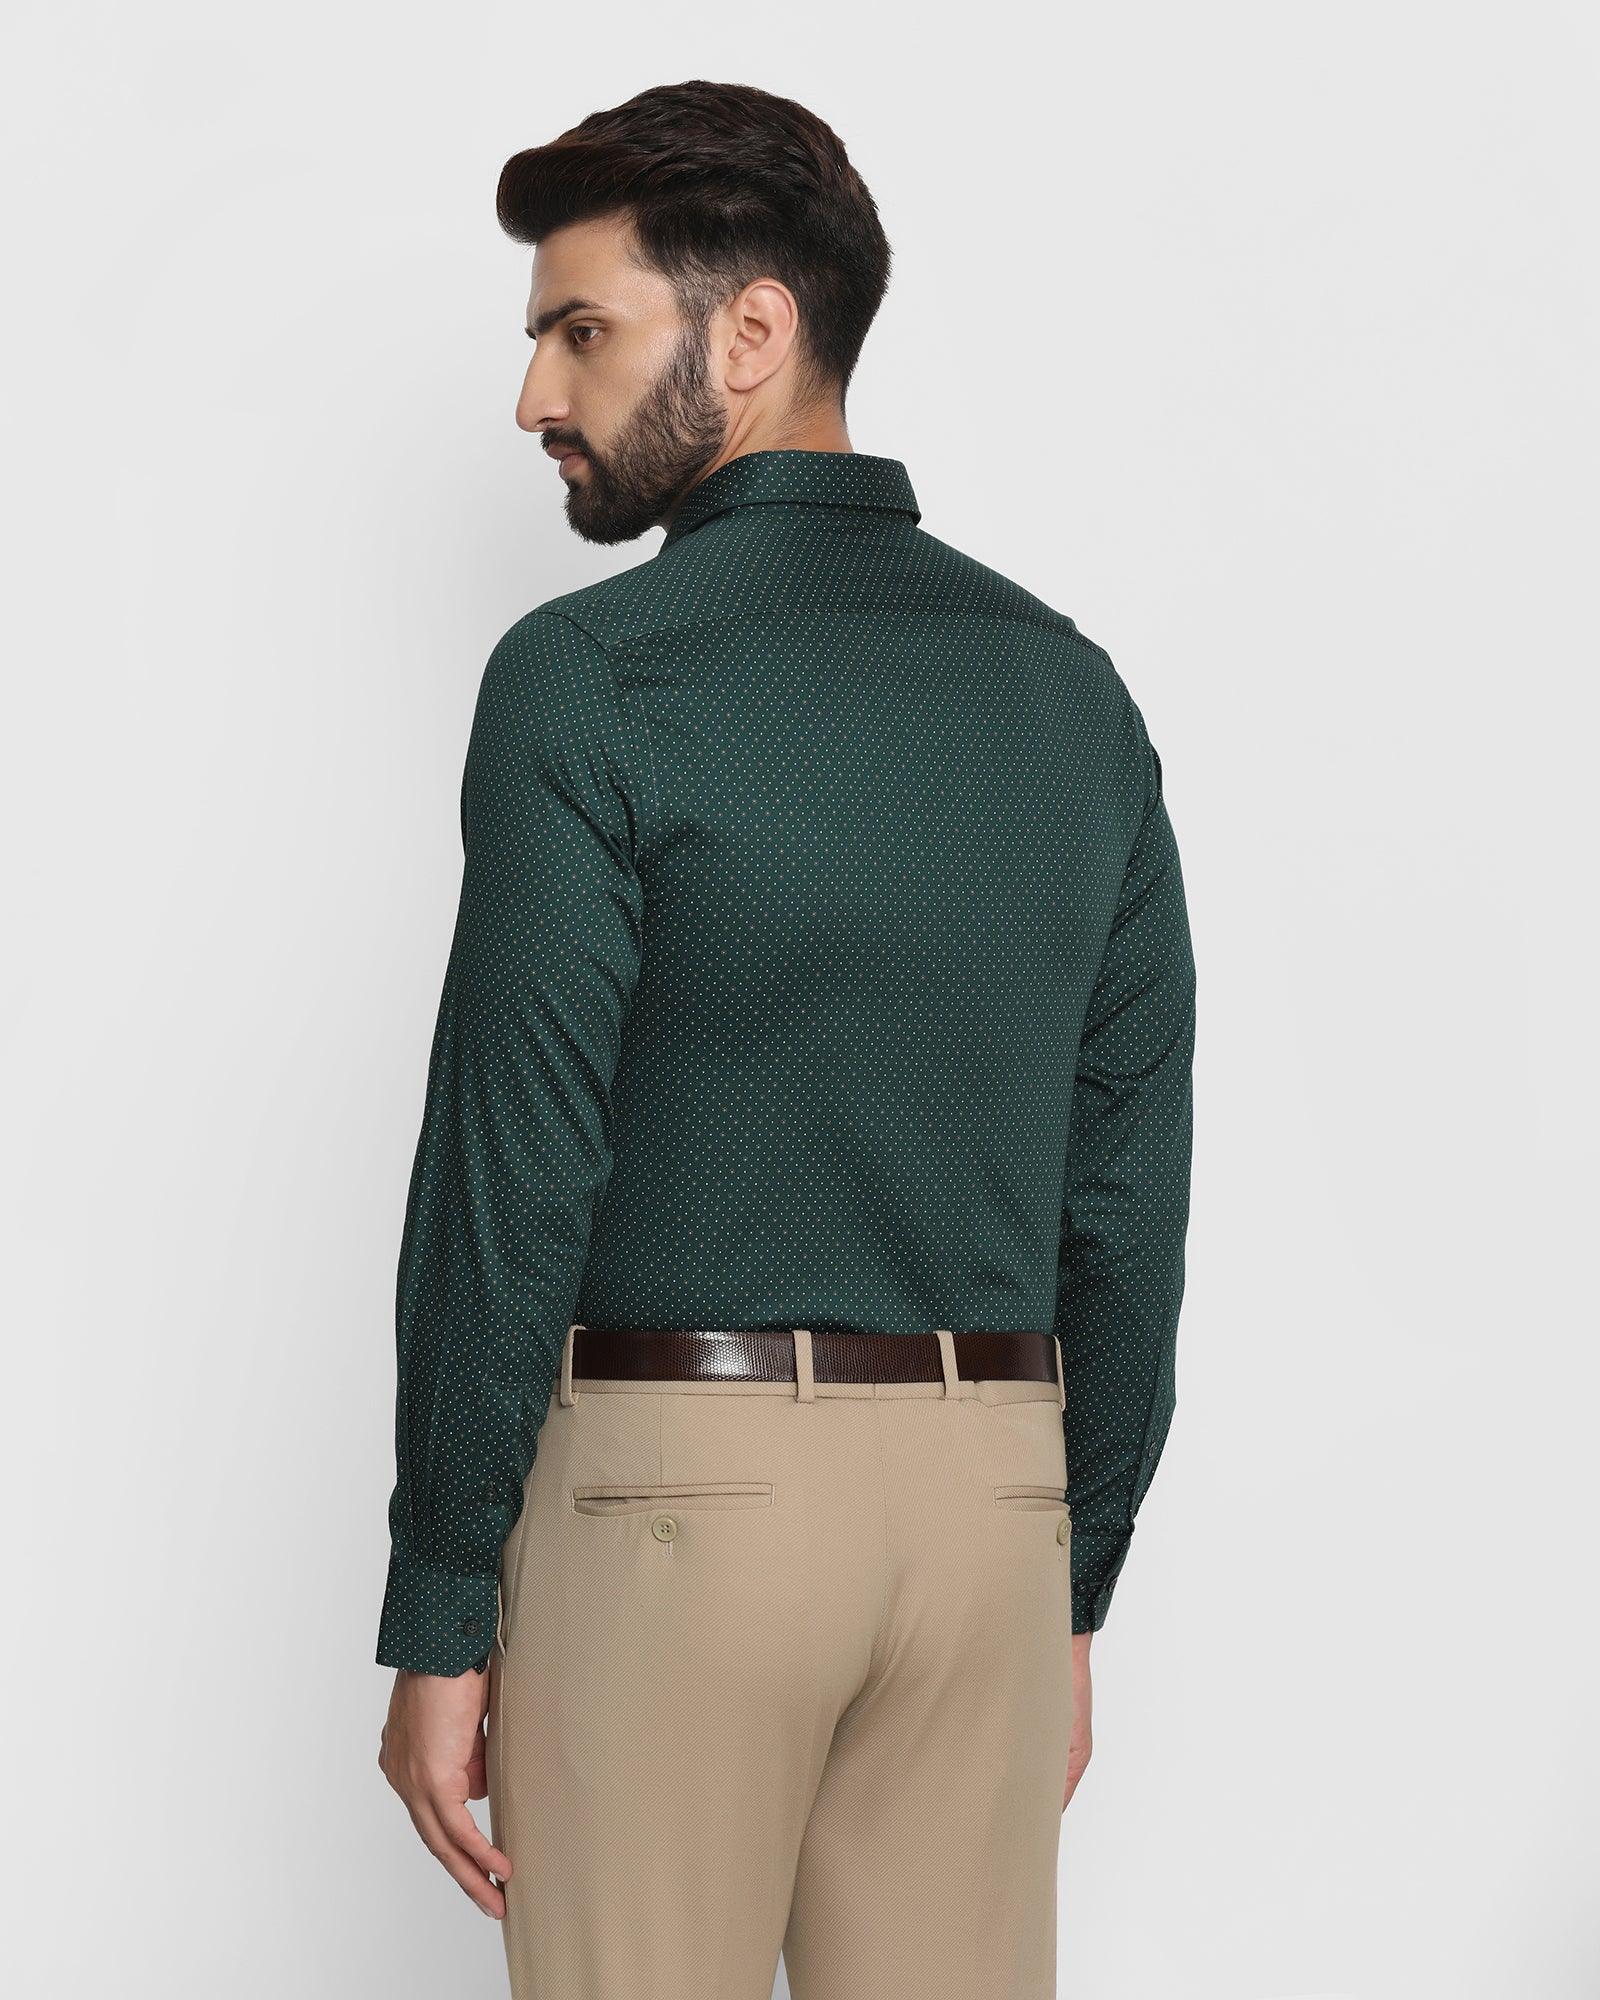 Formal Green Printed Shirt - Trout